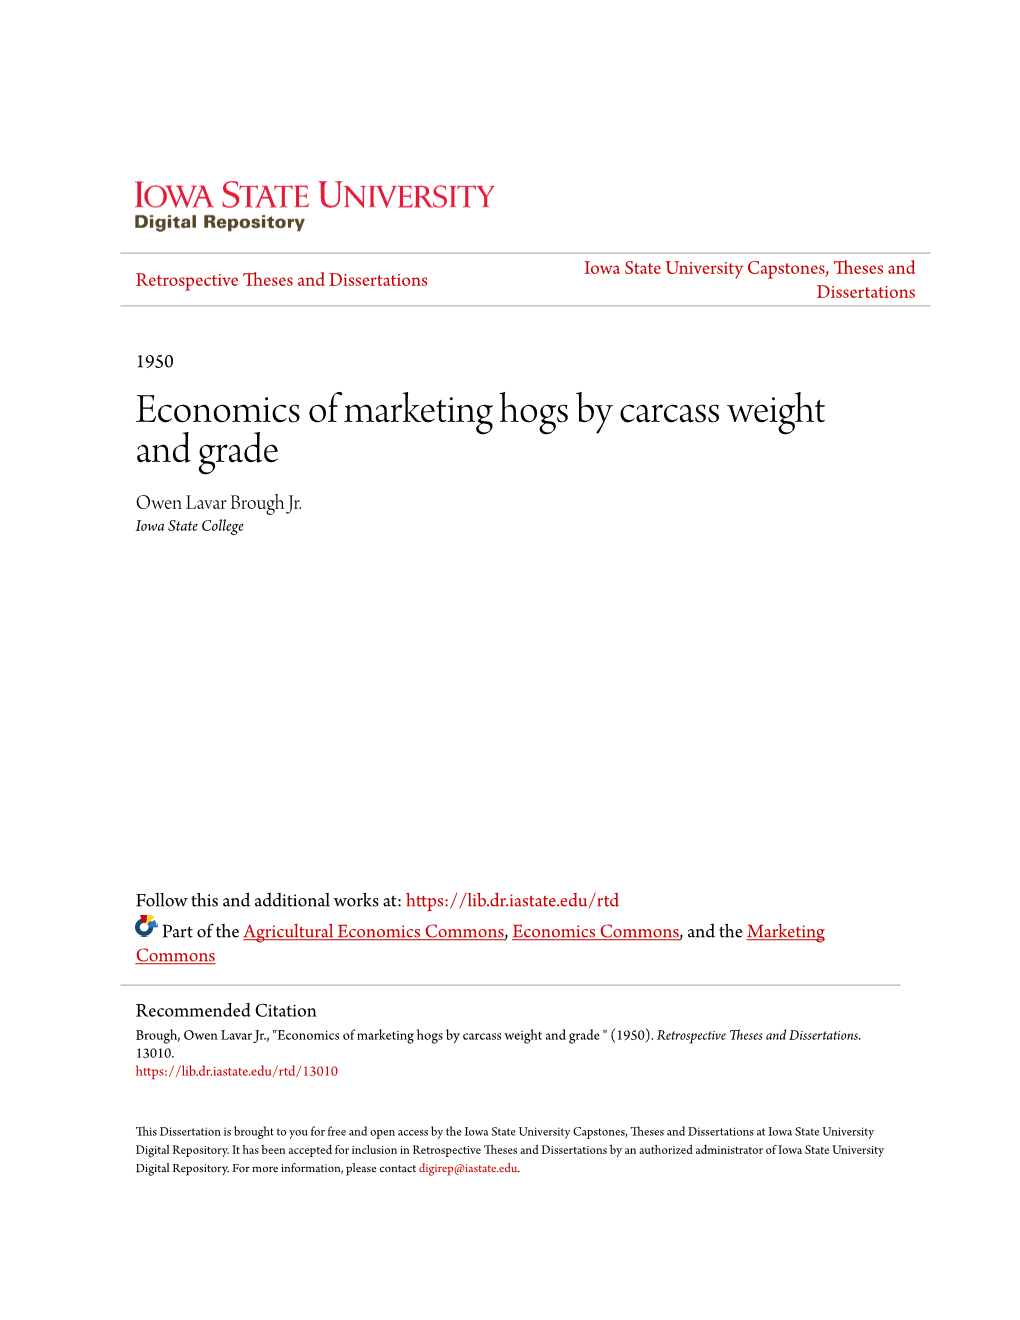 Economics of Marketing Hogs by Carcass Weight and Grade Owen Lavar Brough Jr